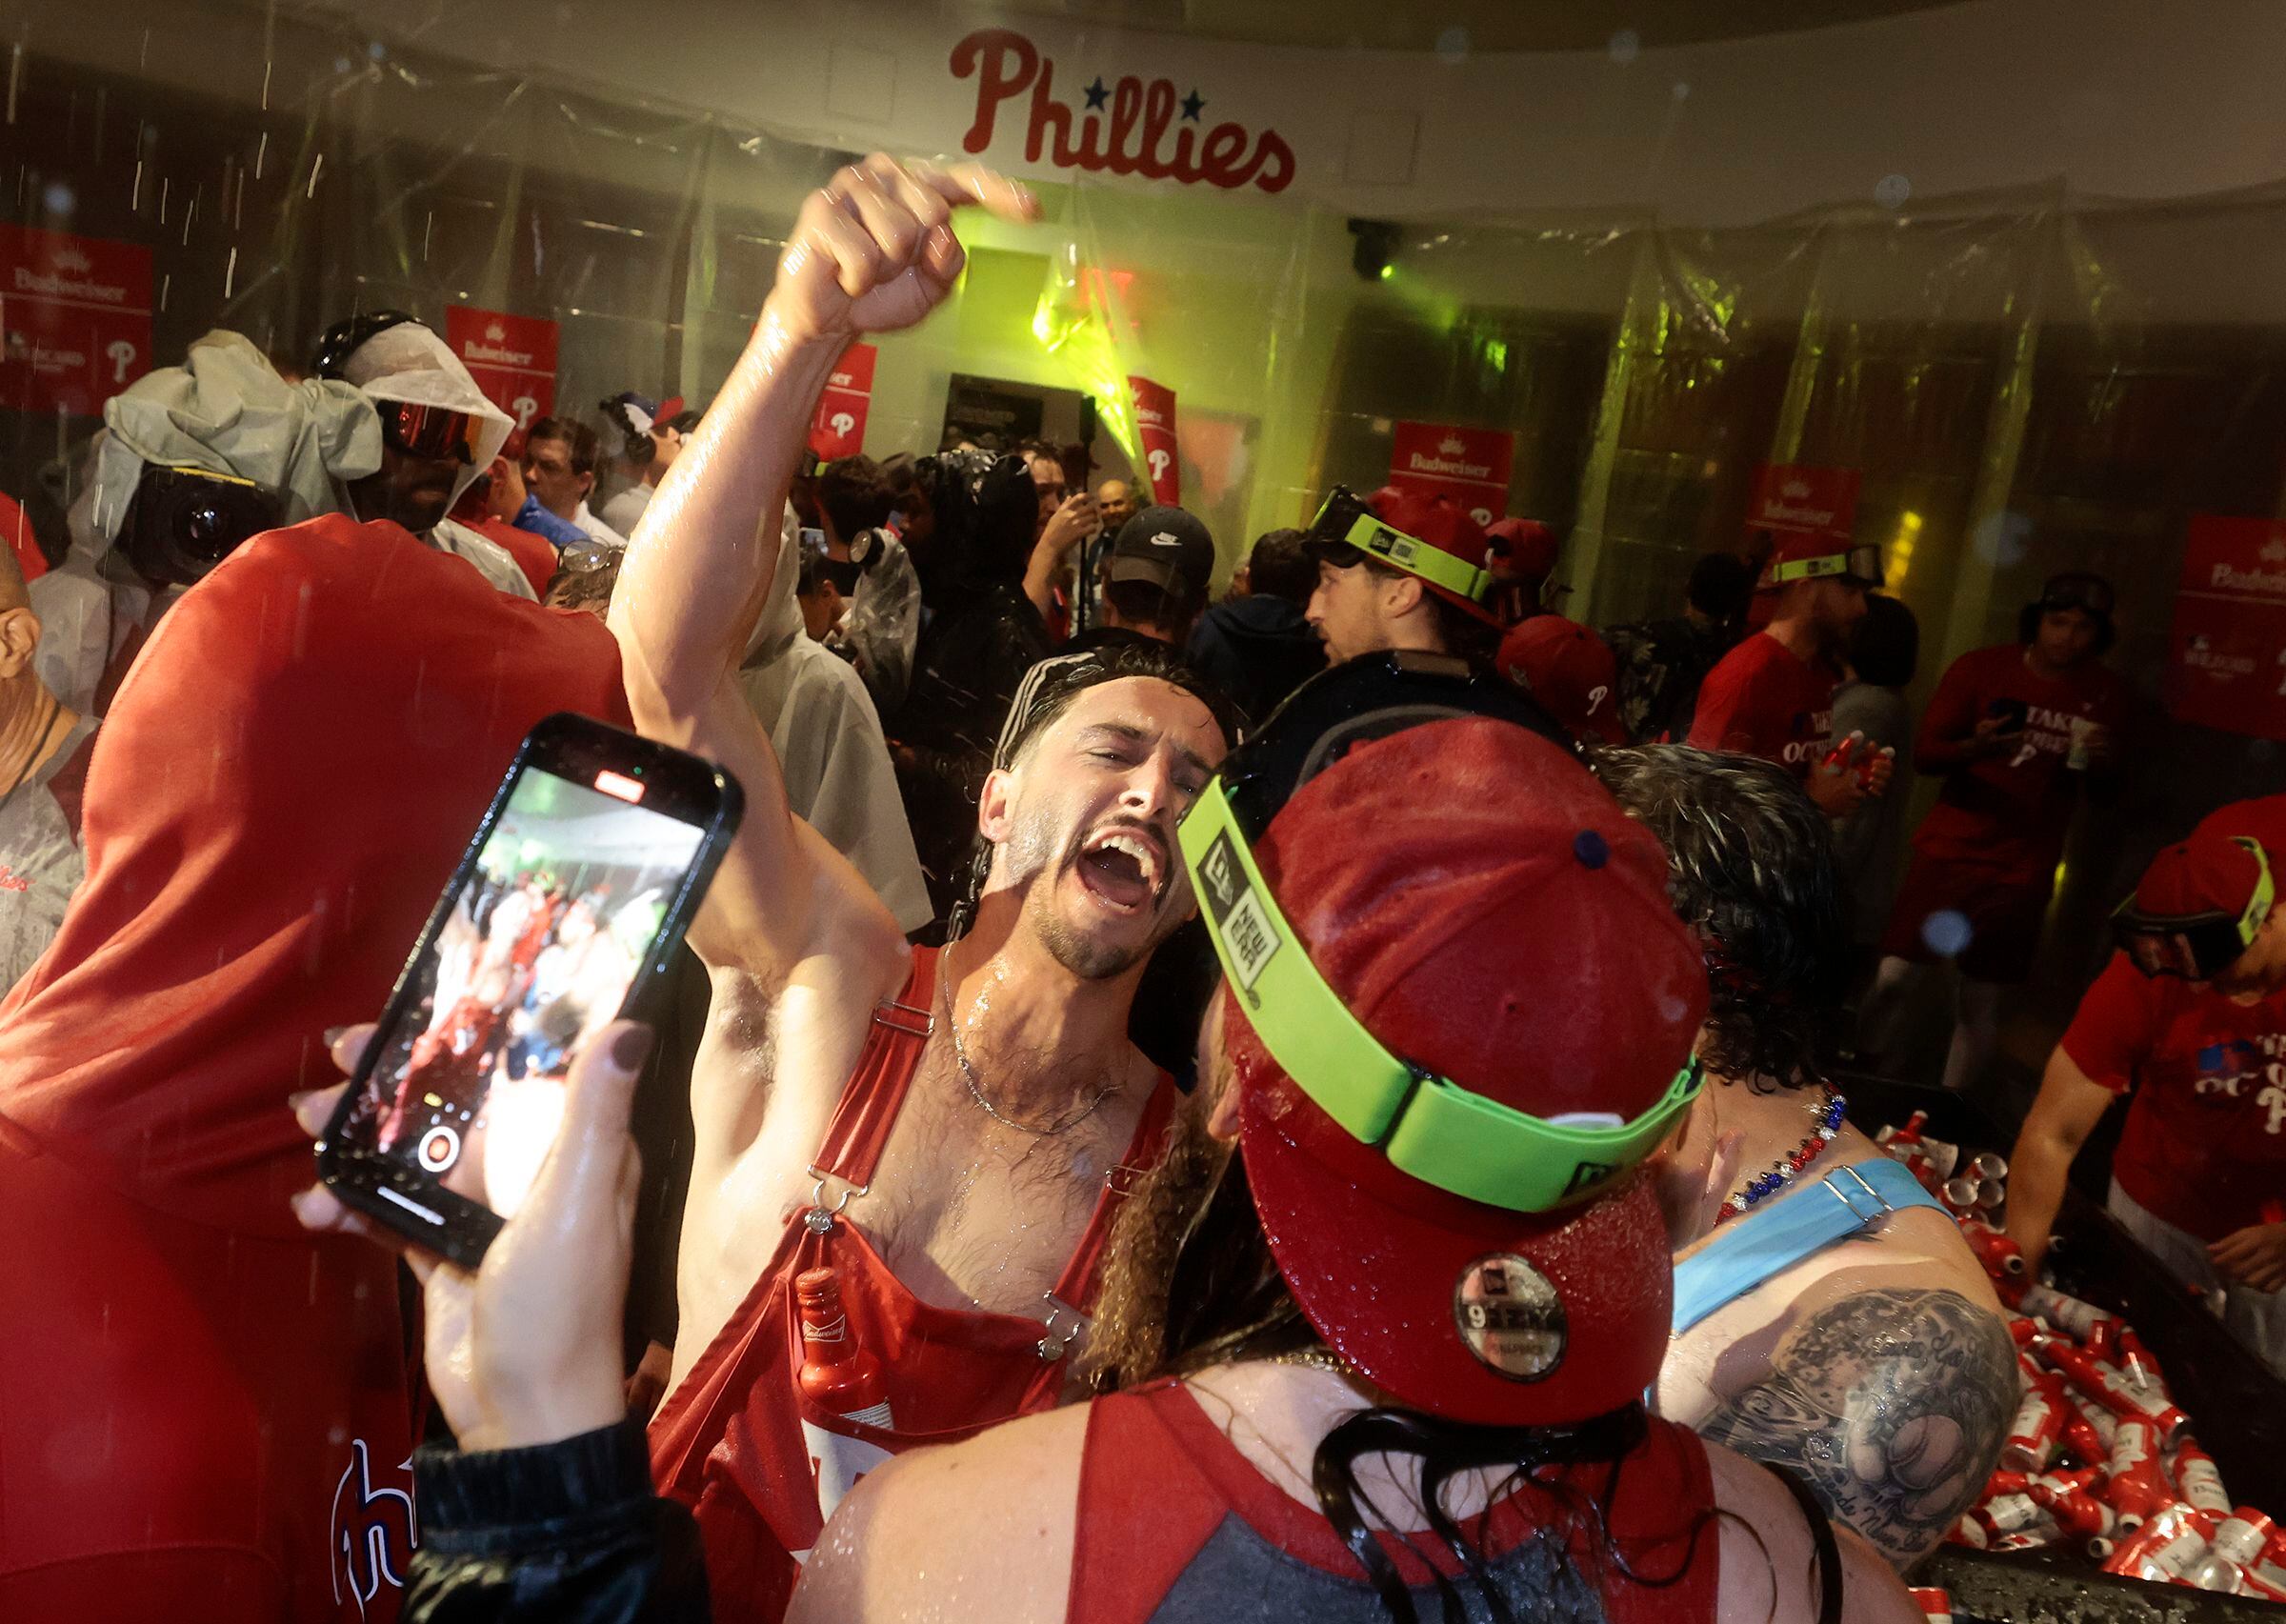 Phillies to NLDS behind Bryson Stott's grand slam – where Braves await